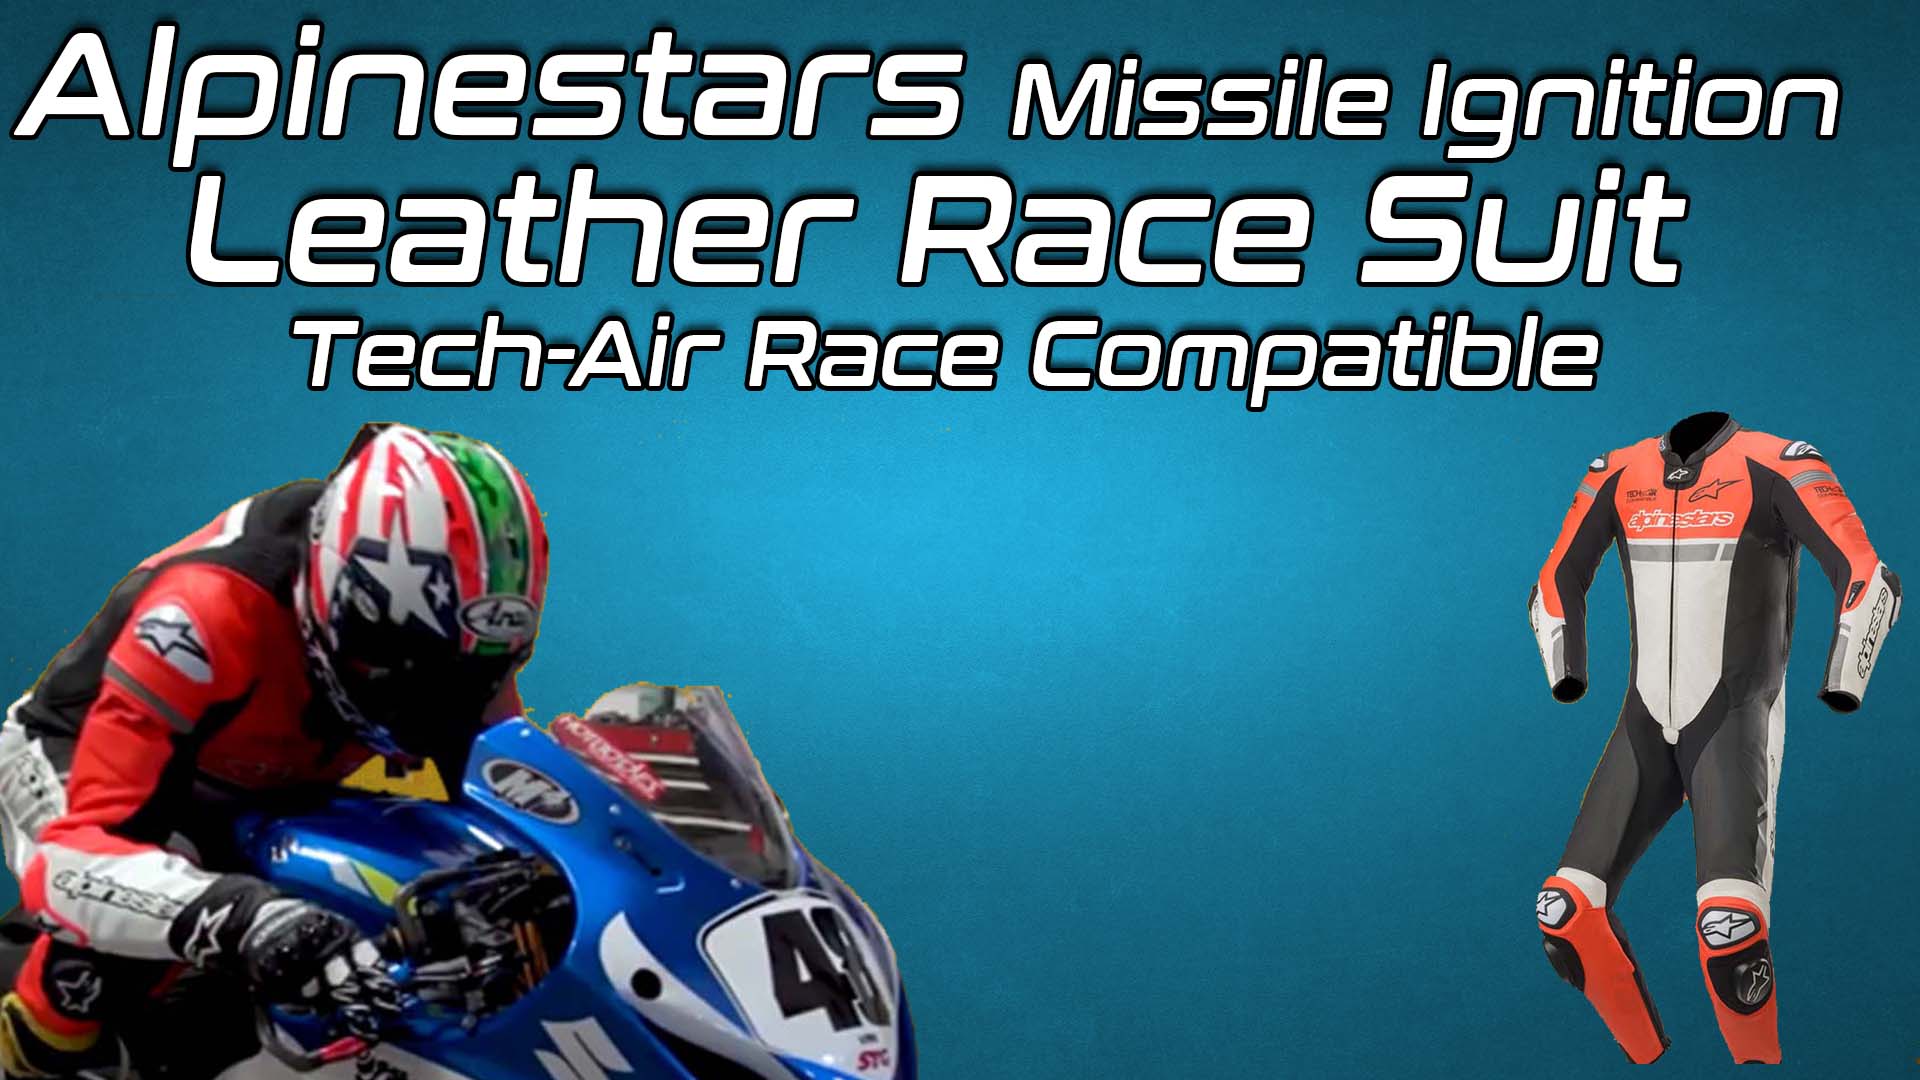 Alpinestars Missile Ignition Leather Race Suit Tech-Air Race Compatible